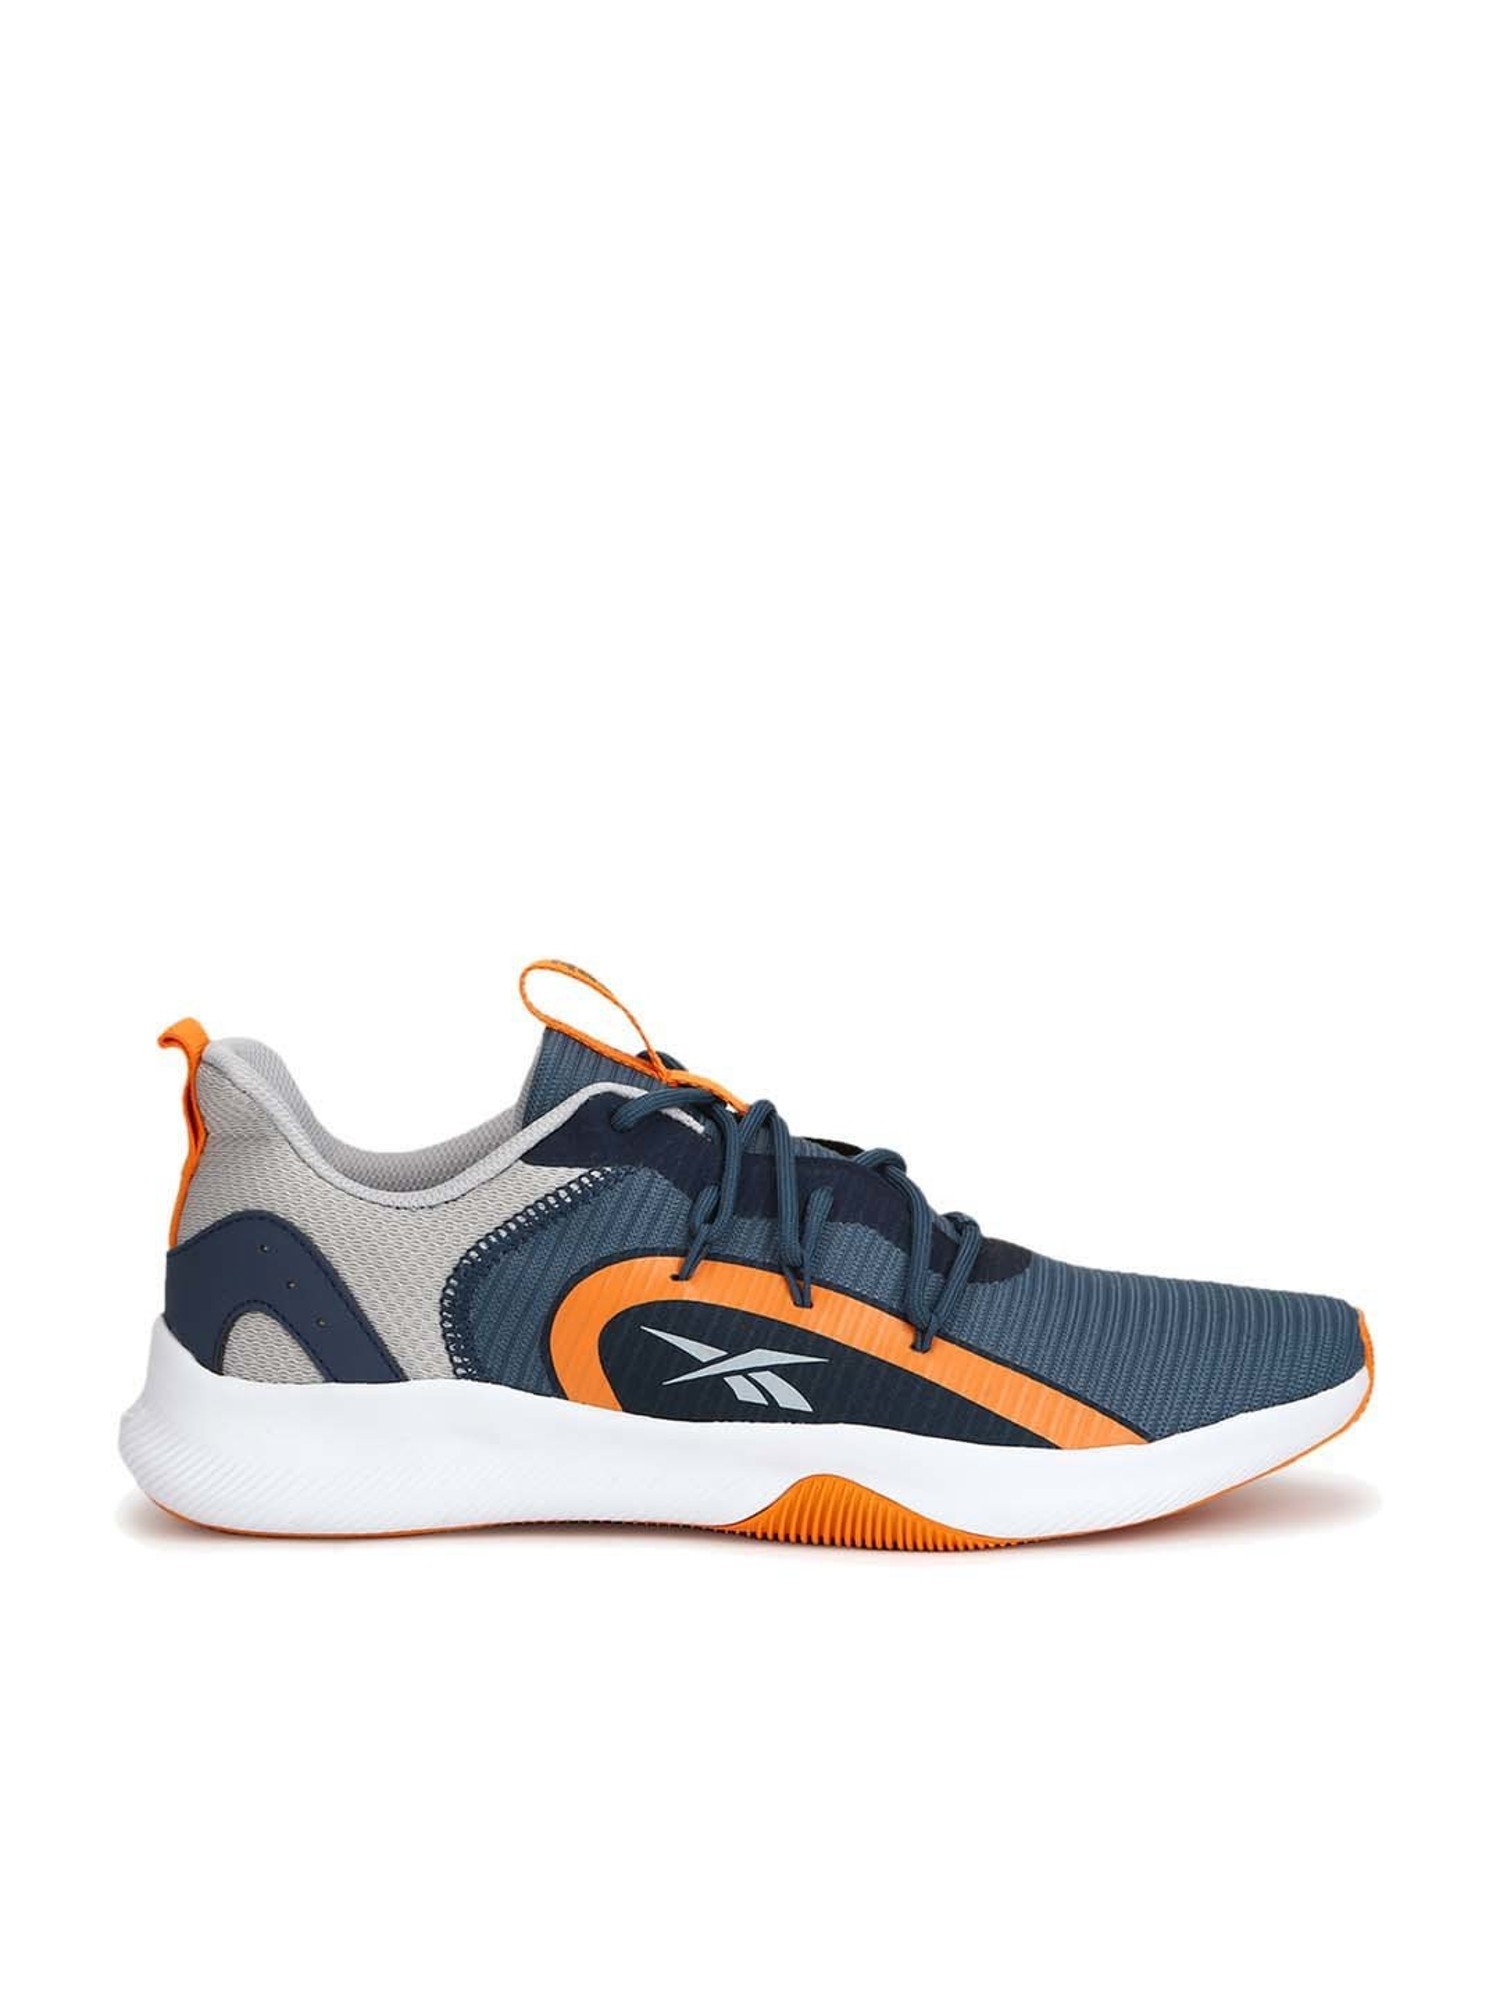 Reebok Running Shoes For Men  Blue  for Men  Buy Reebok Mens Sport Shoes  at 50 off Paytm Mall